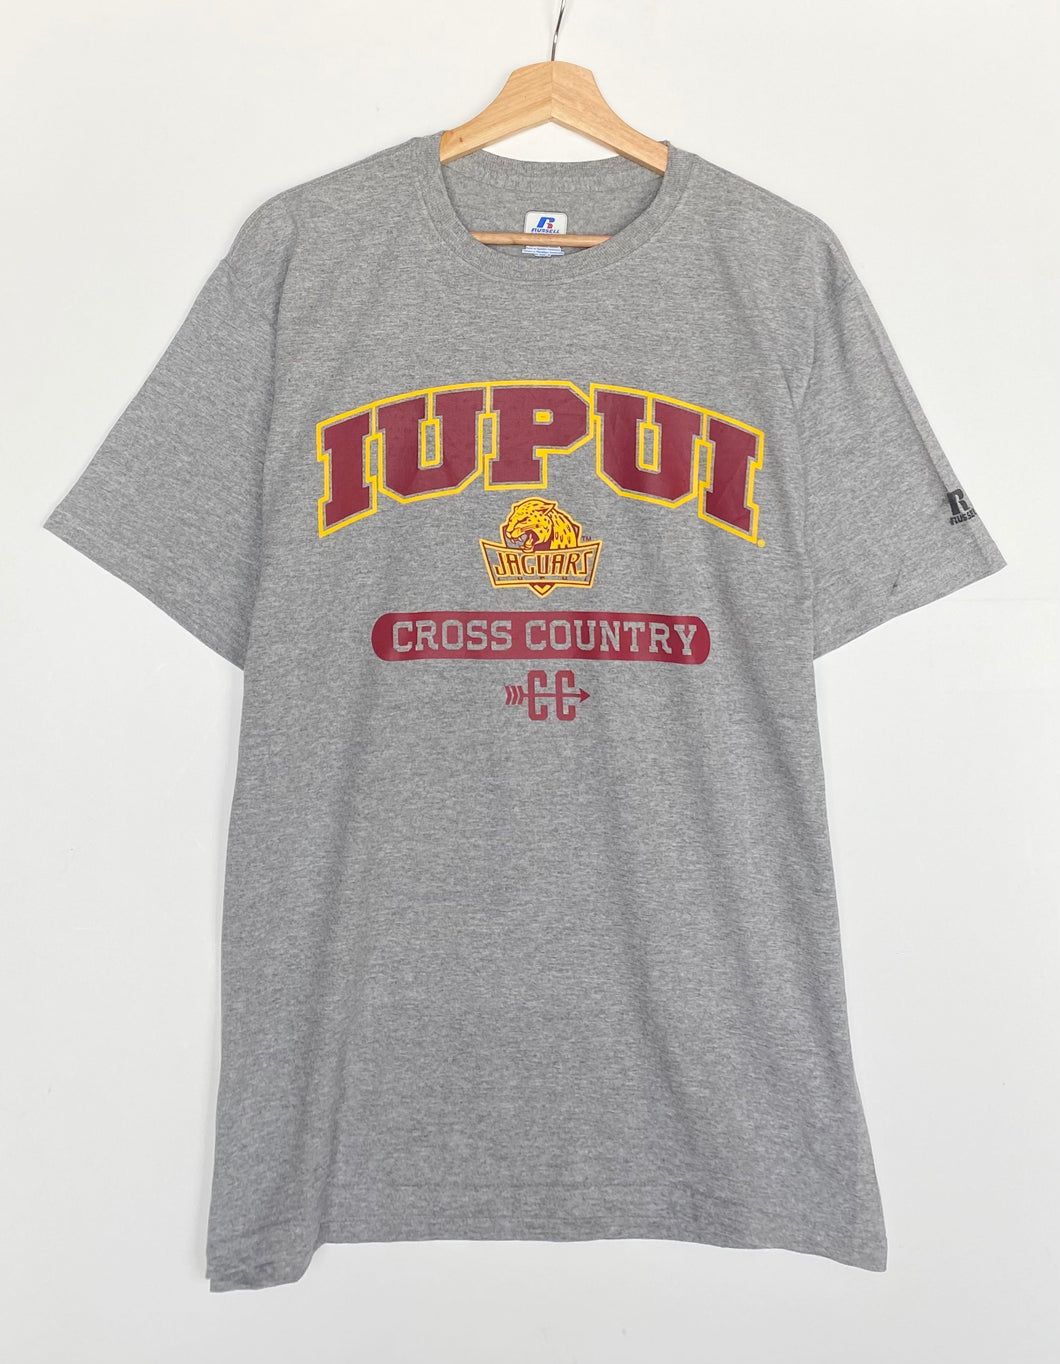 ‘Jaguars Cross Country’ American College t-shirt (M)